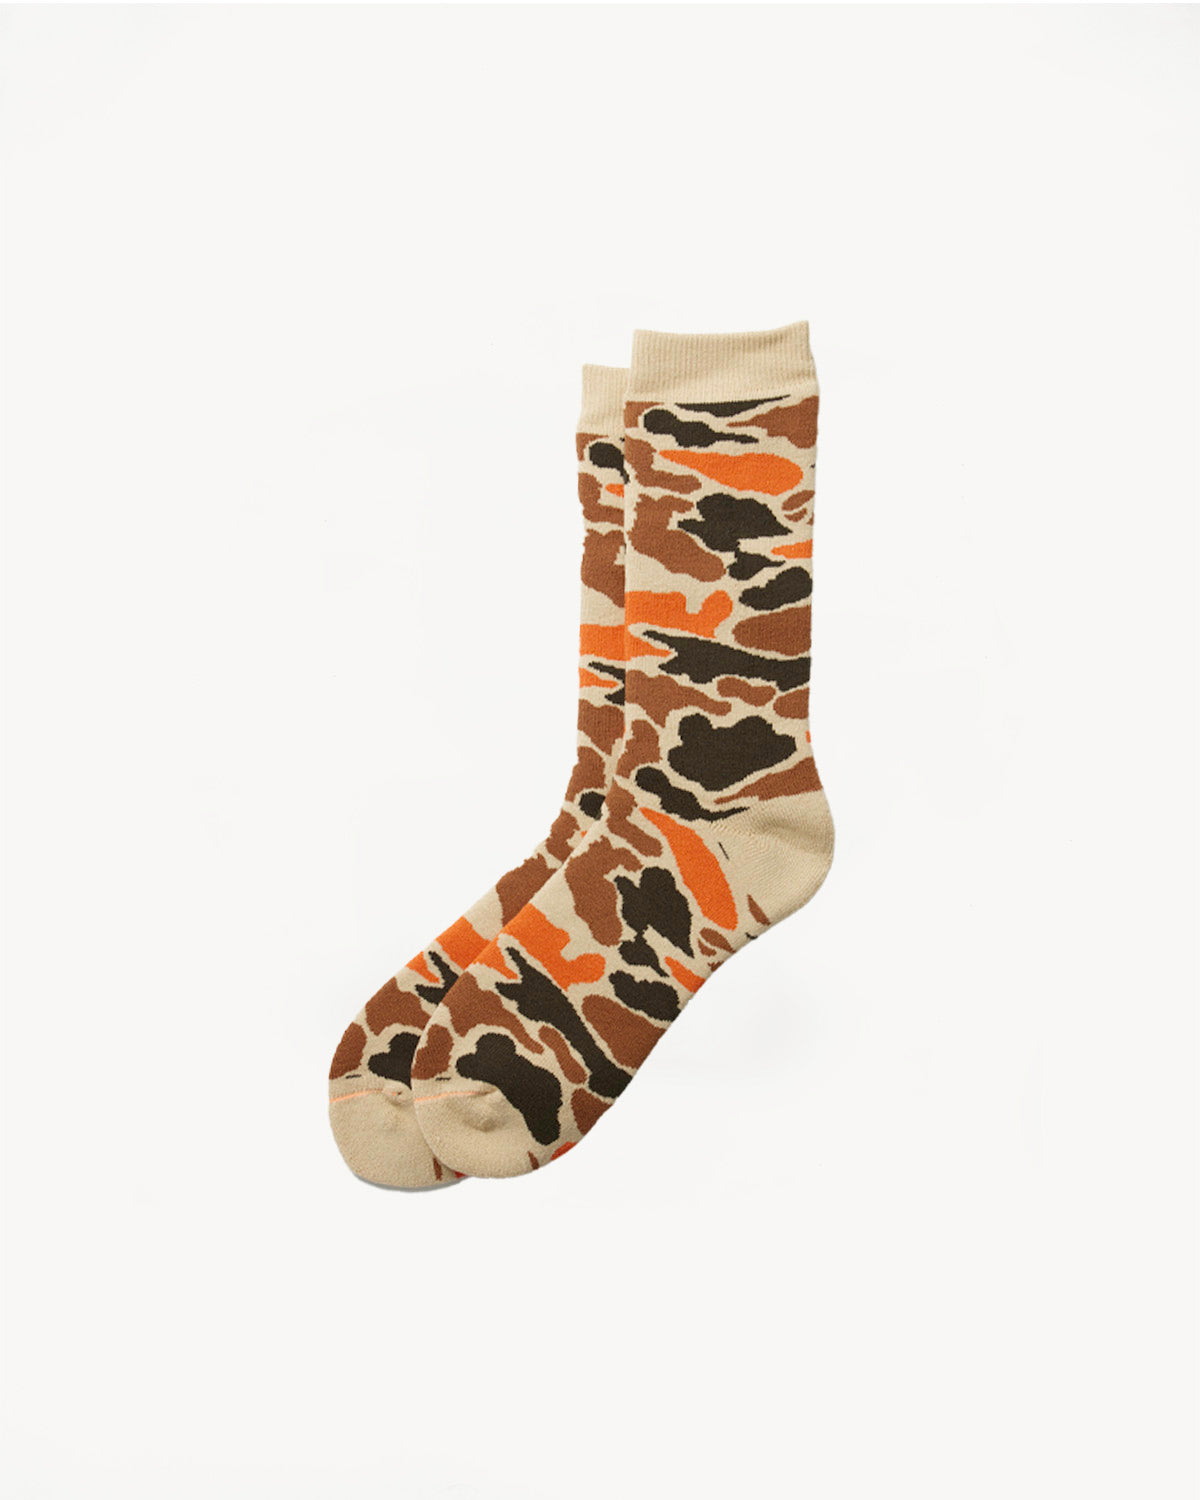 R1339 - Pile Camo Socks - Beige, Orange